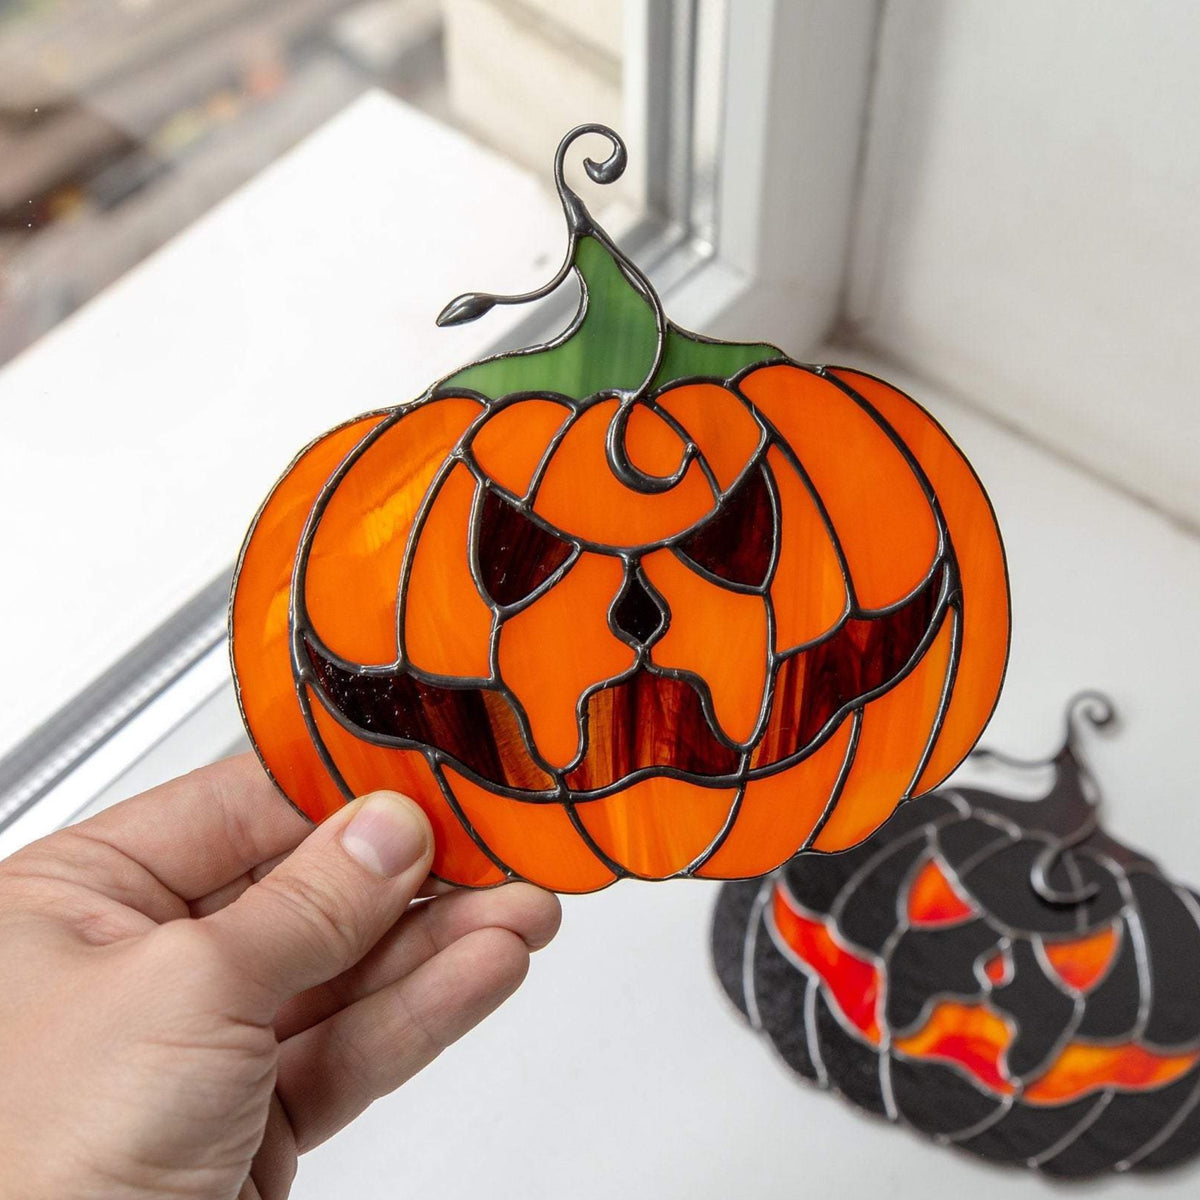 Halloween stained glass pumpkin creepy decoration